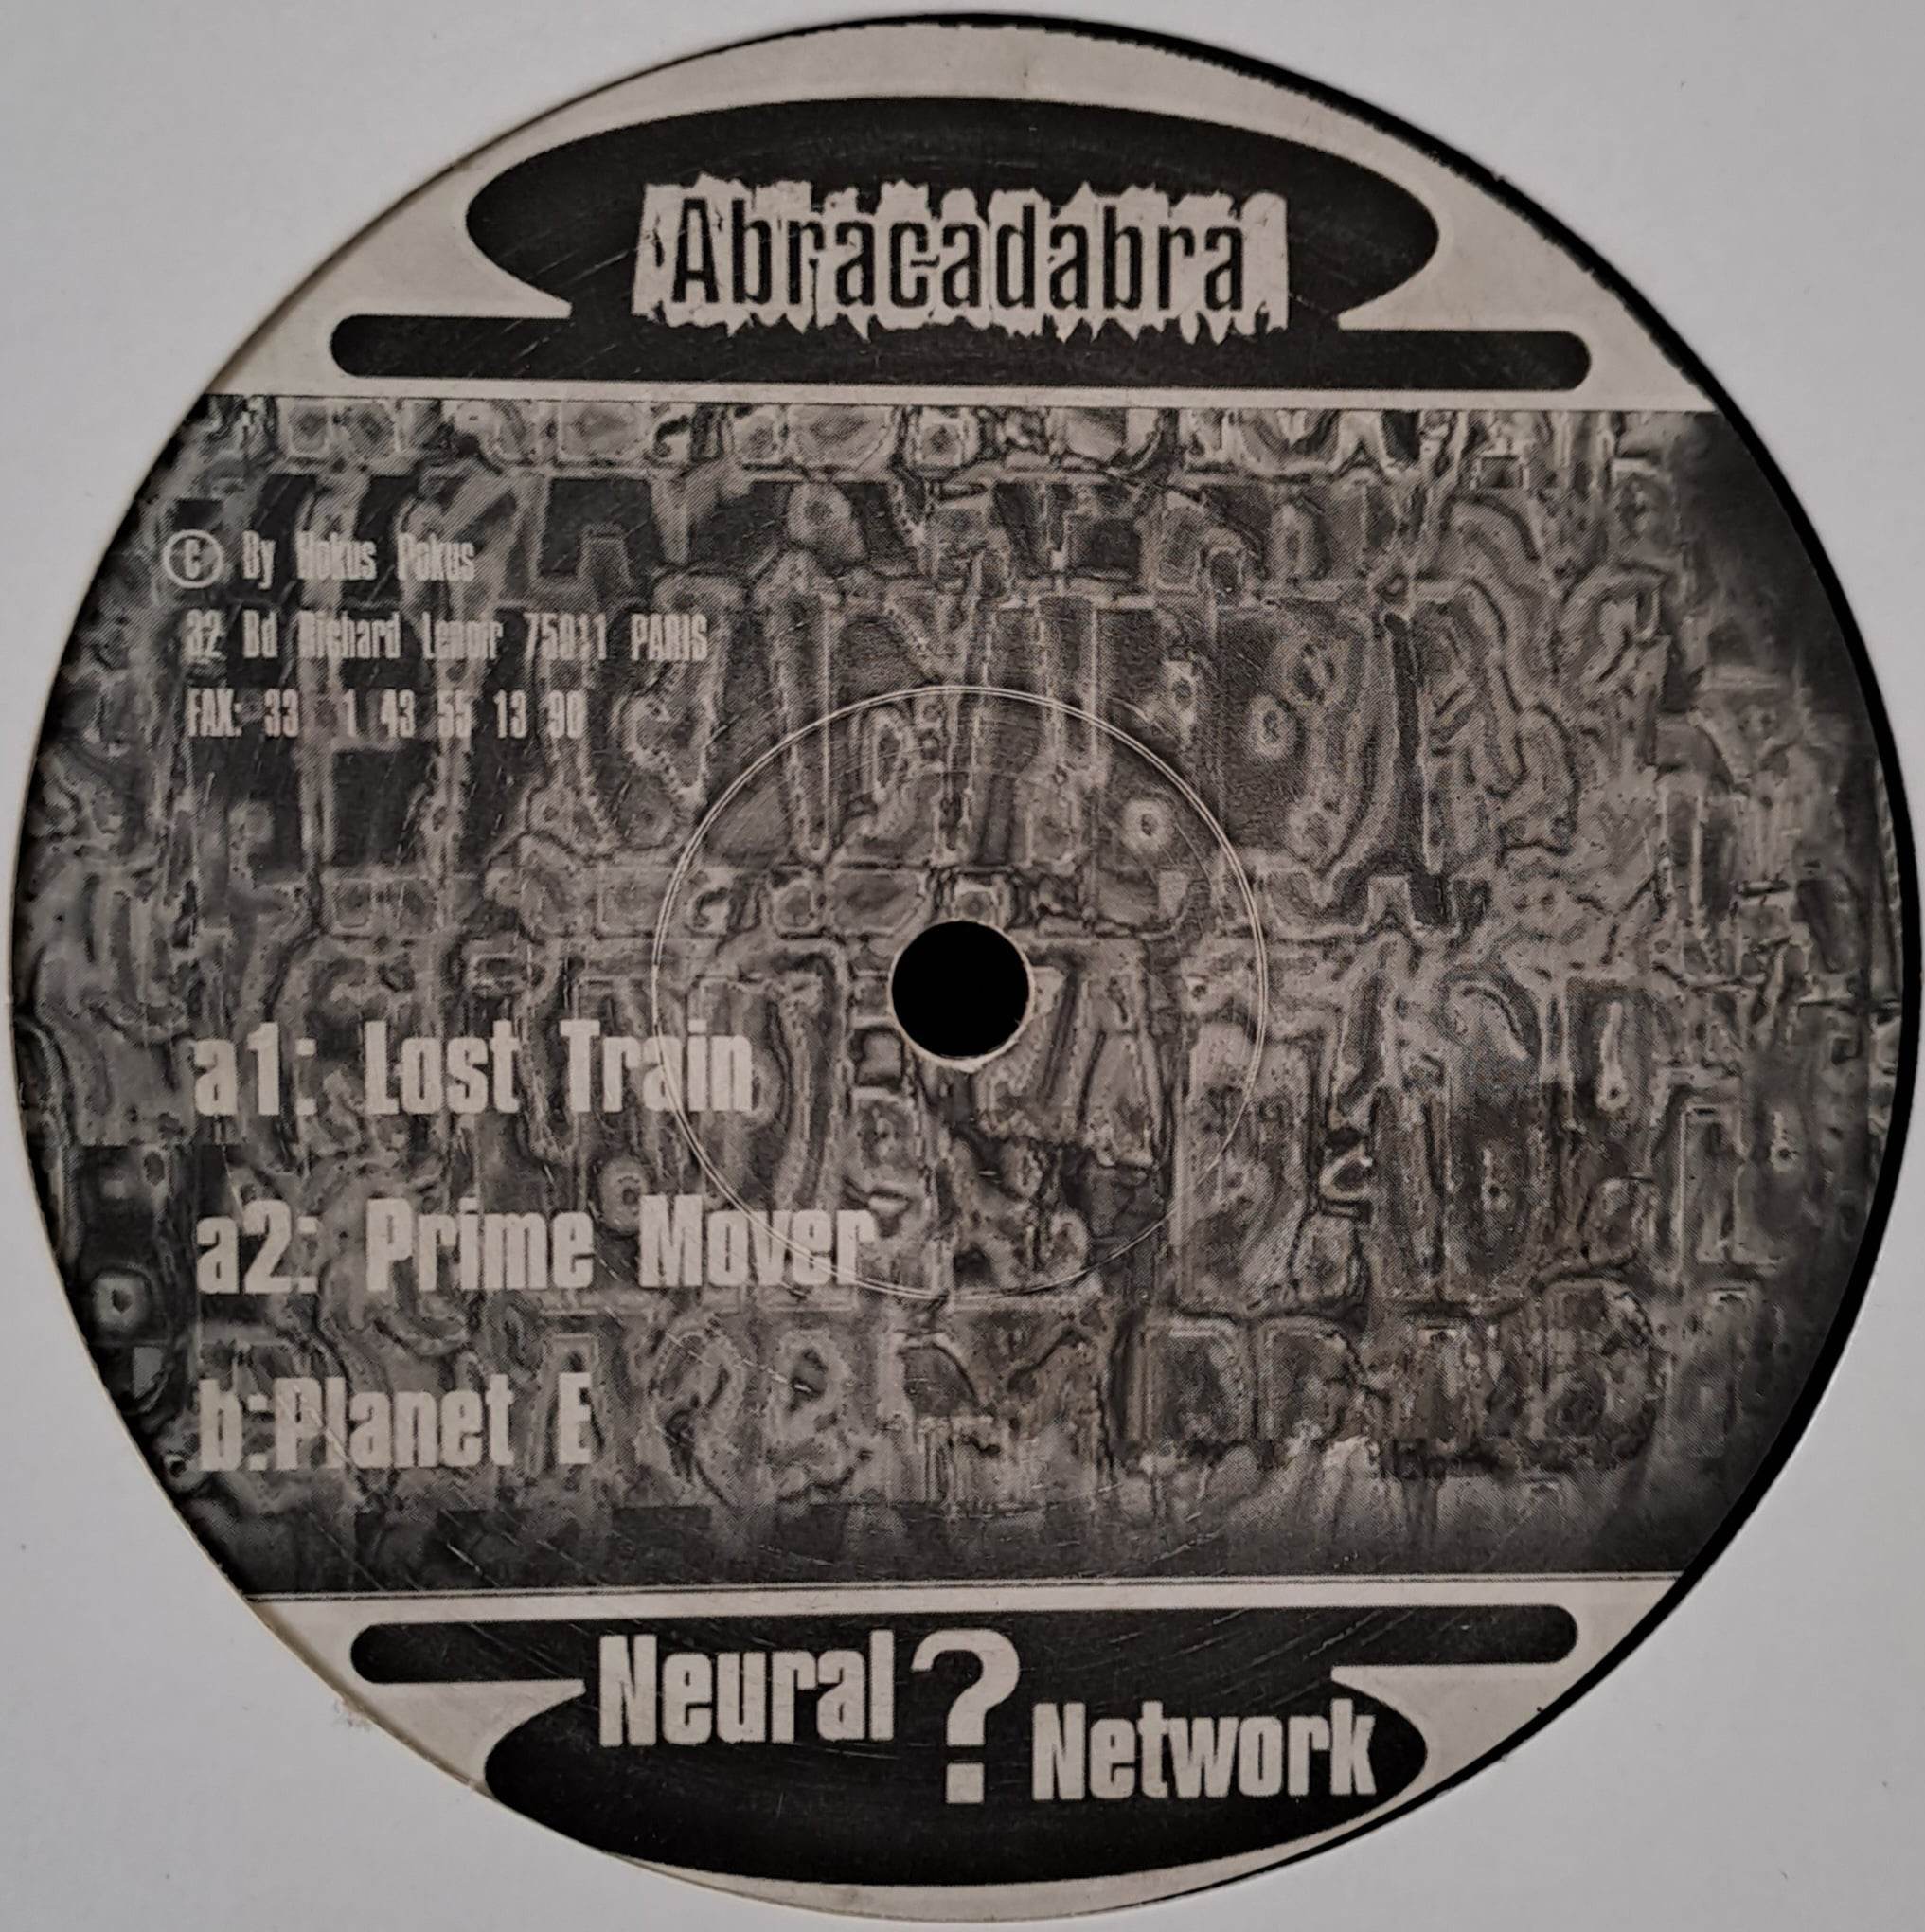 Abracadabra 02 - vinyle hard techno